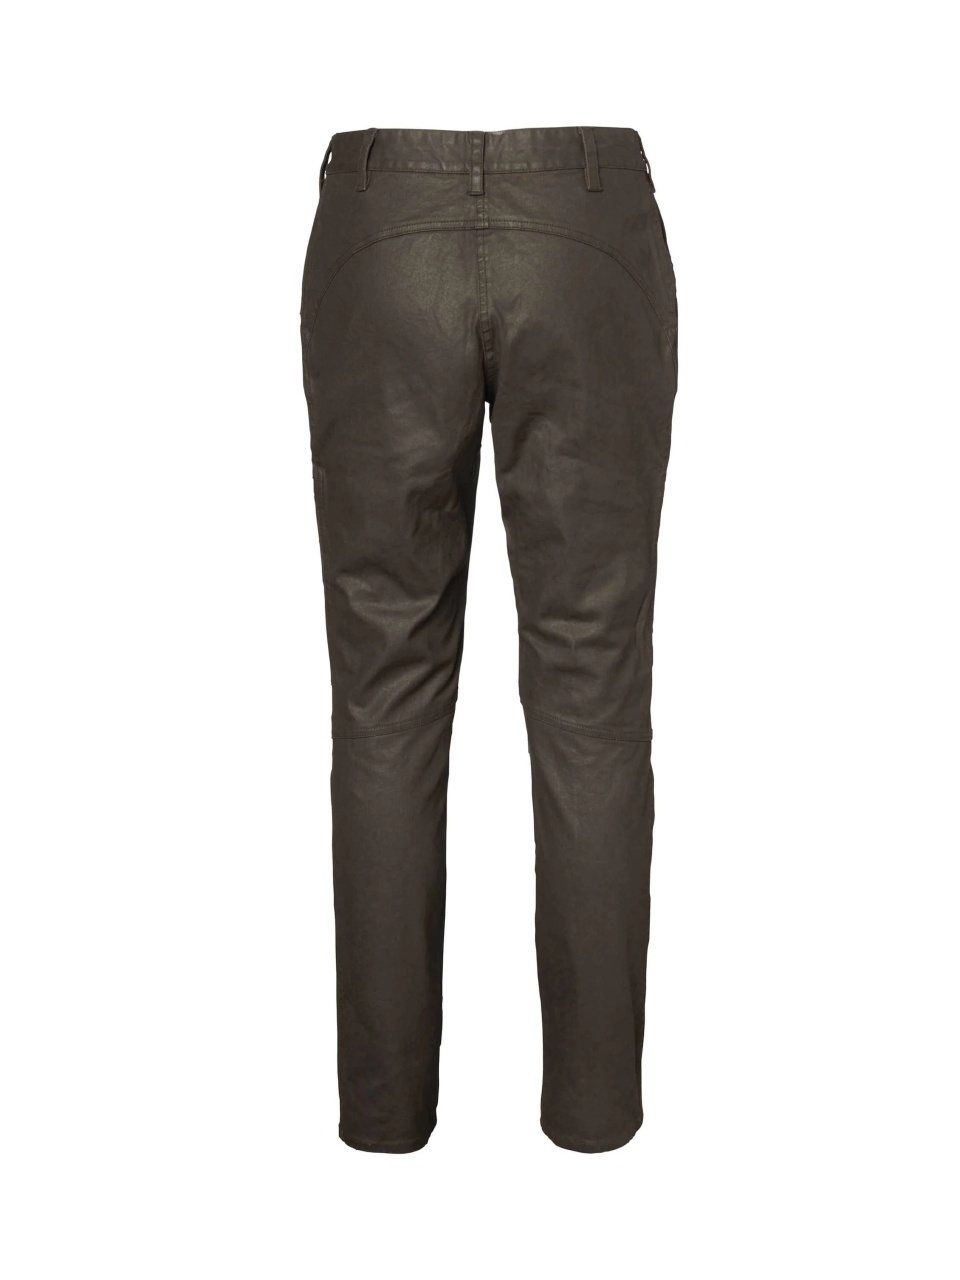 Chevalier Vintage Pants Women Leather Brown-3